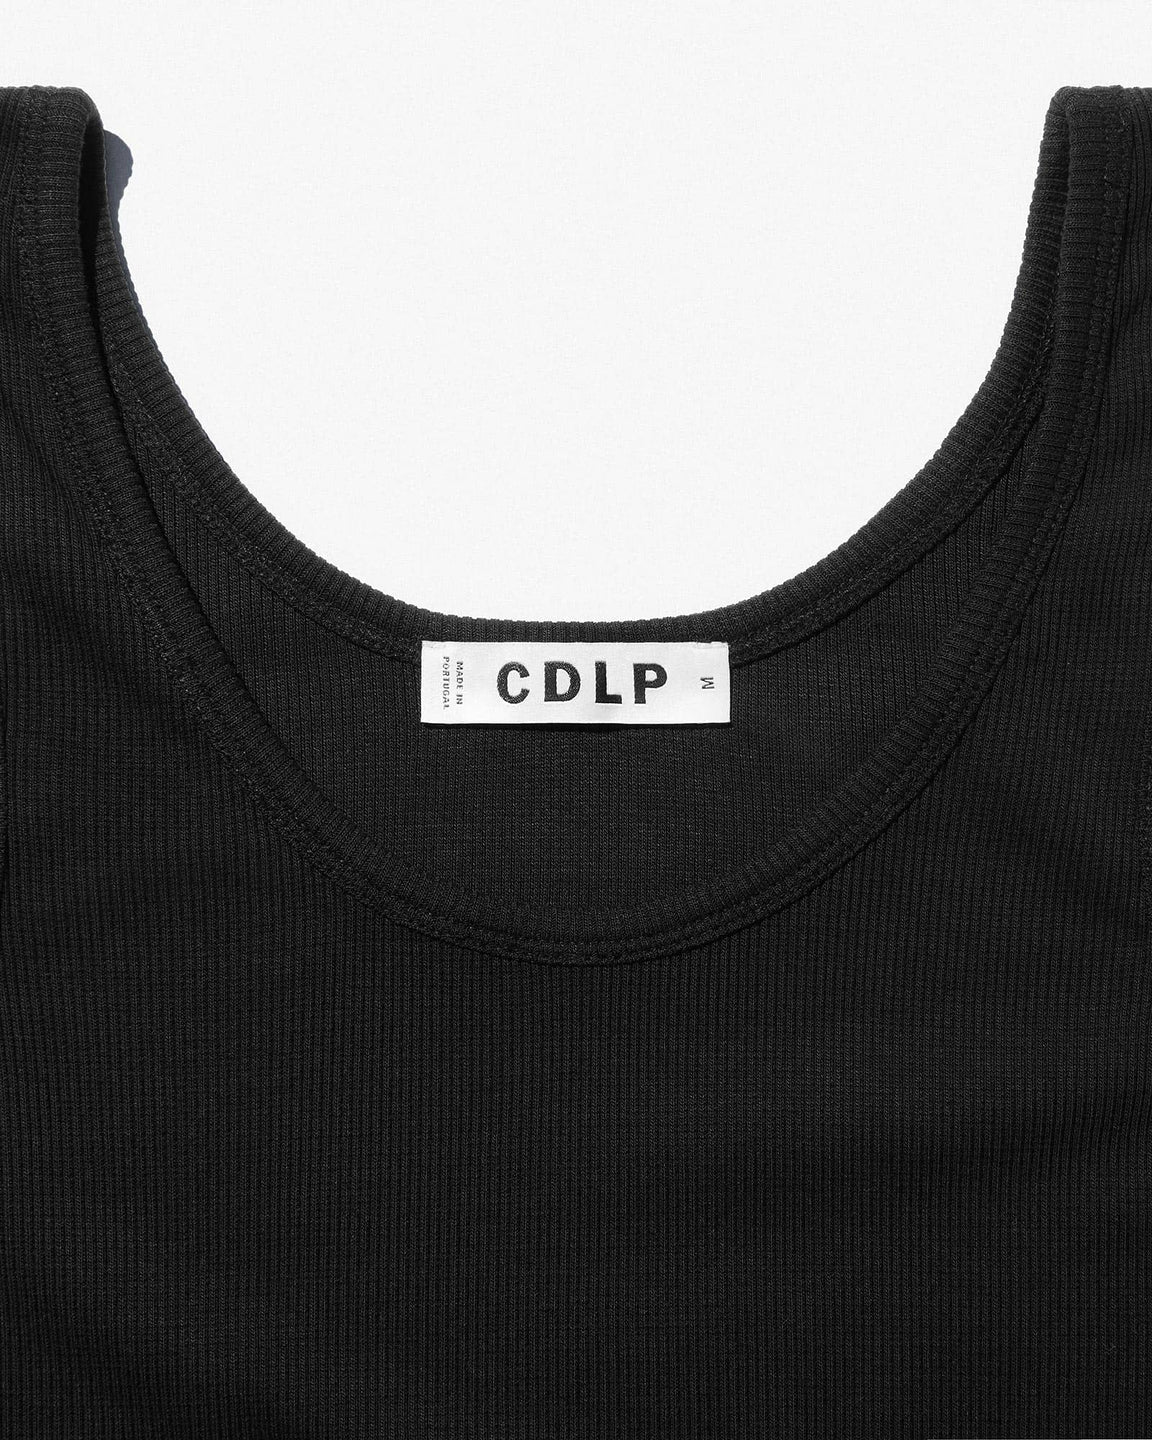 CDLP Women's Rib Tank Top in Black